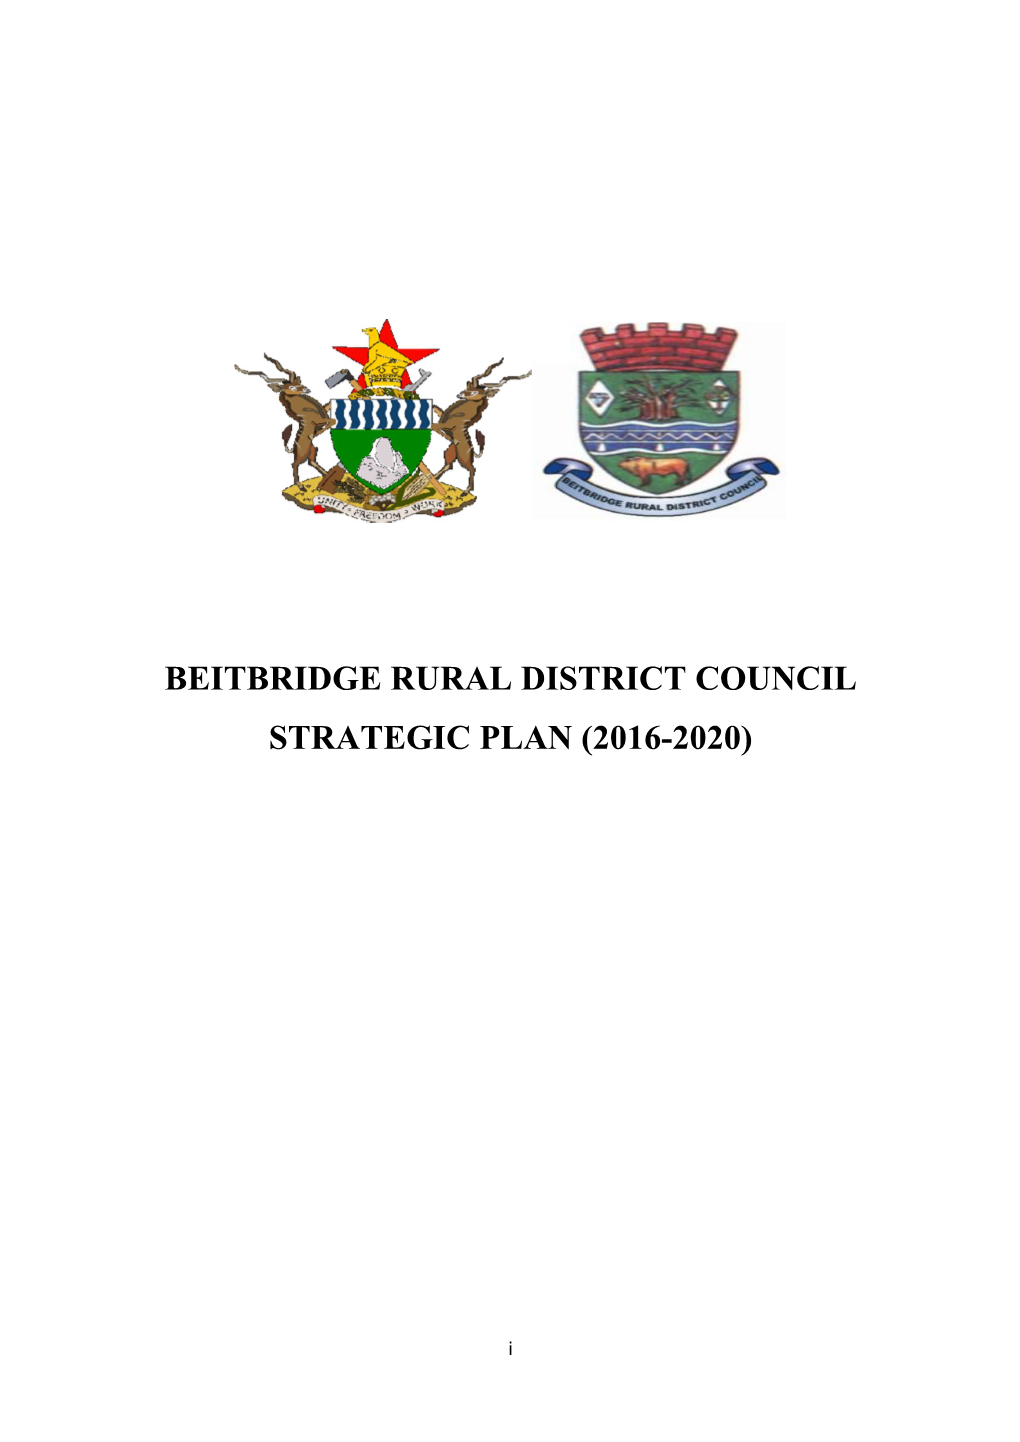 Beitbridge Rural District Council Strategic Plan (2016-2020)